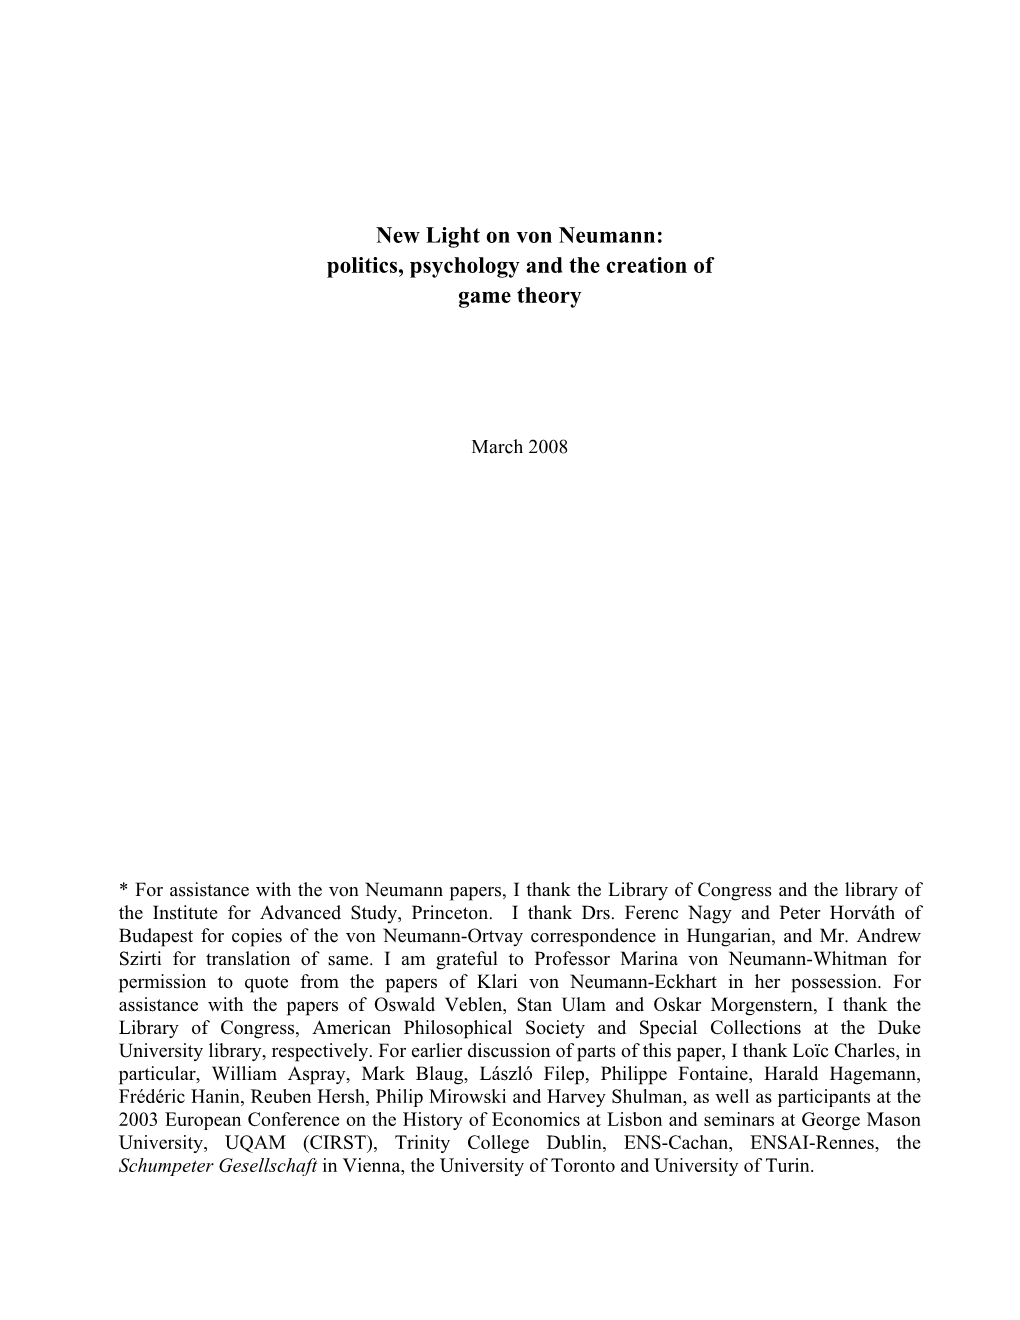 Von Neumann Paper for E